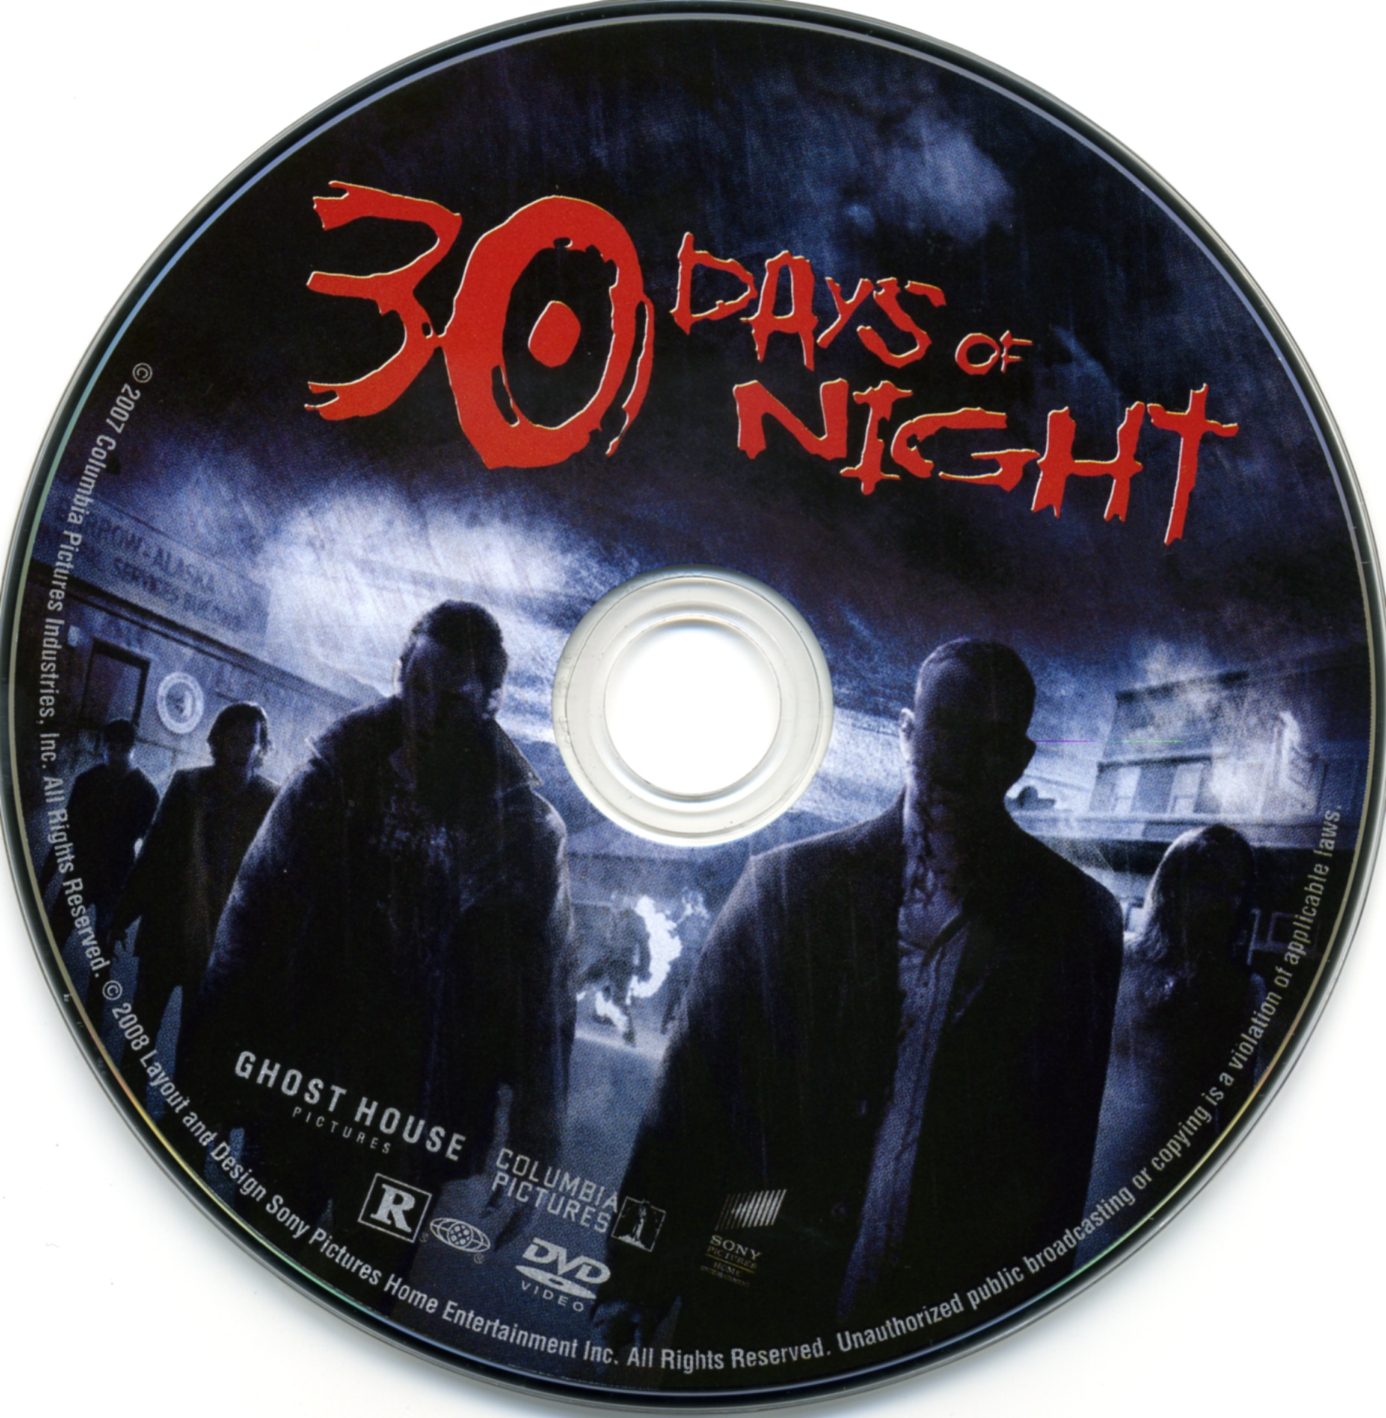 30 days of night - 30 jours de nuit Zone 1